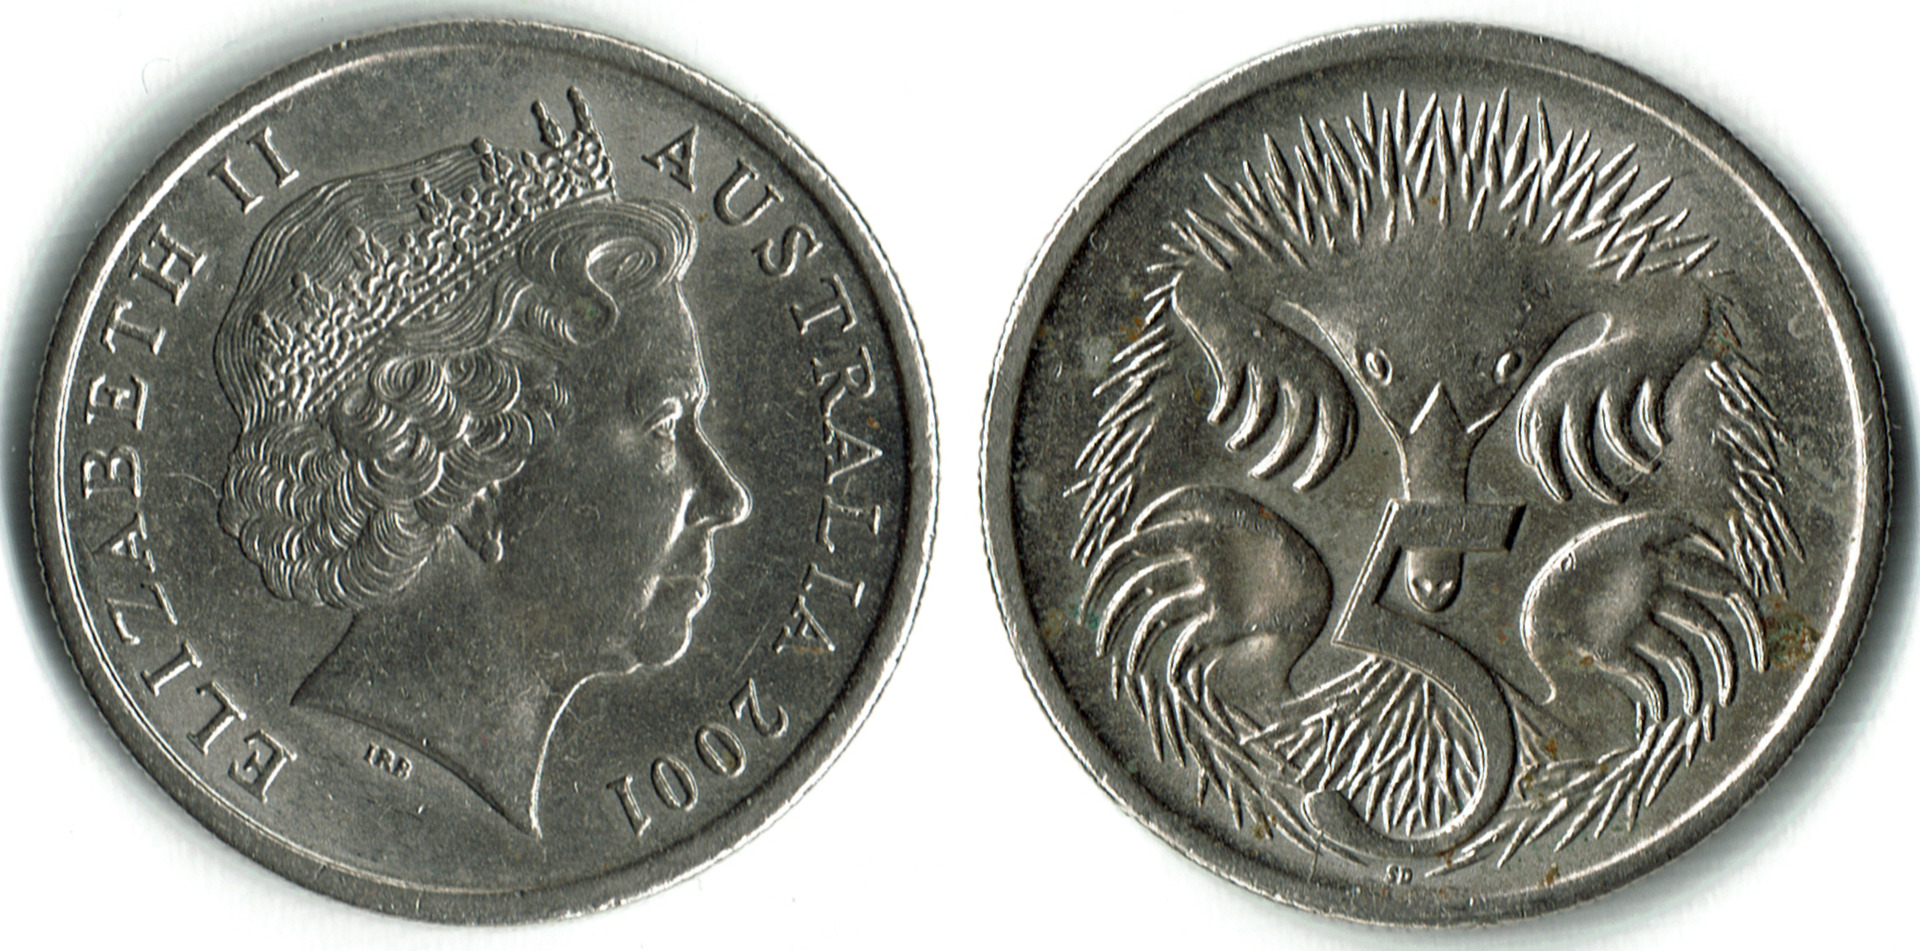 2001 Australia 5 Cents.jpg